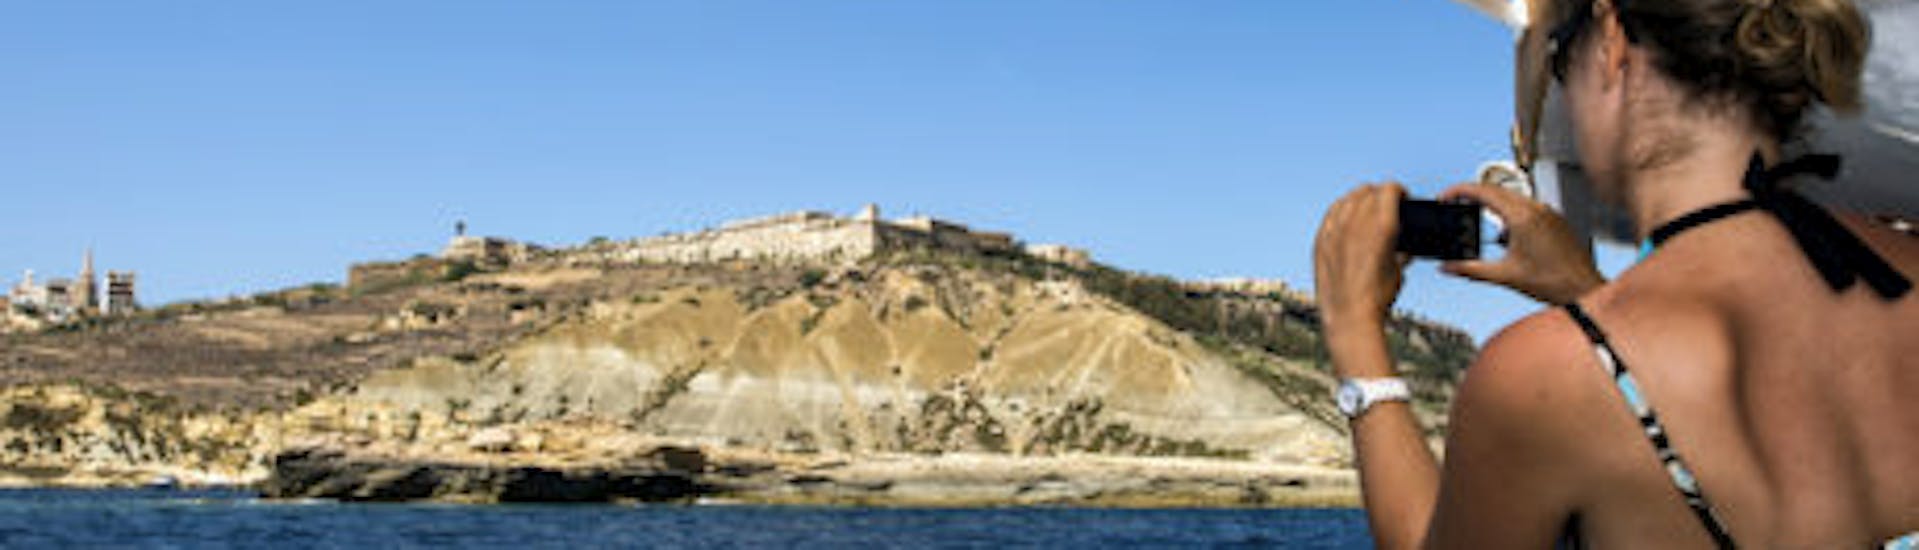 Gita in barca da Gozo intorno a Gozo e alla Laguna Blu.